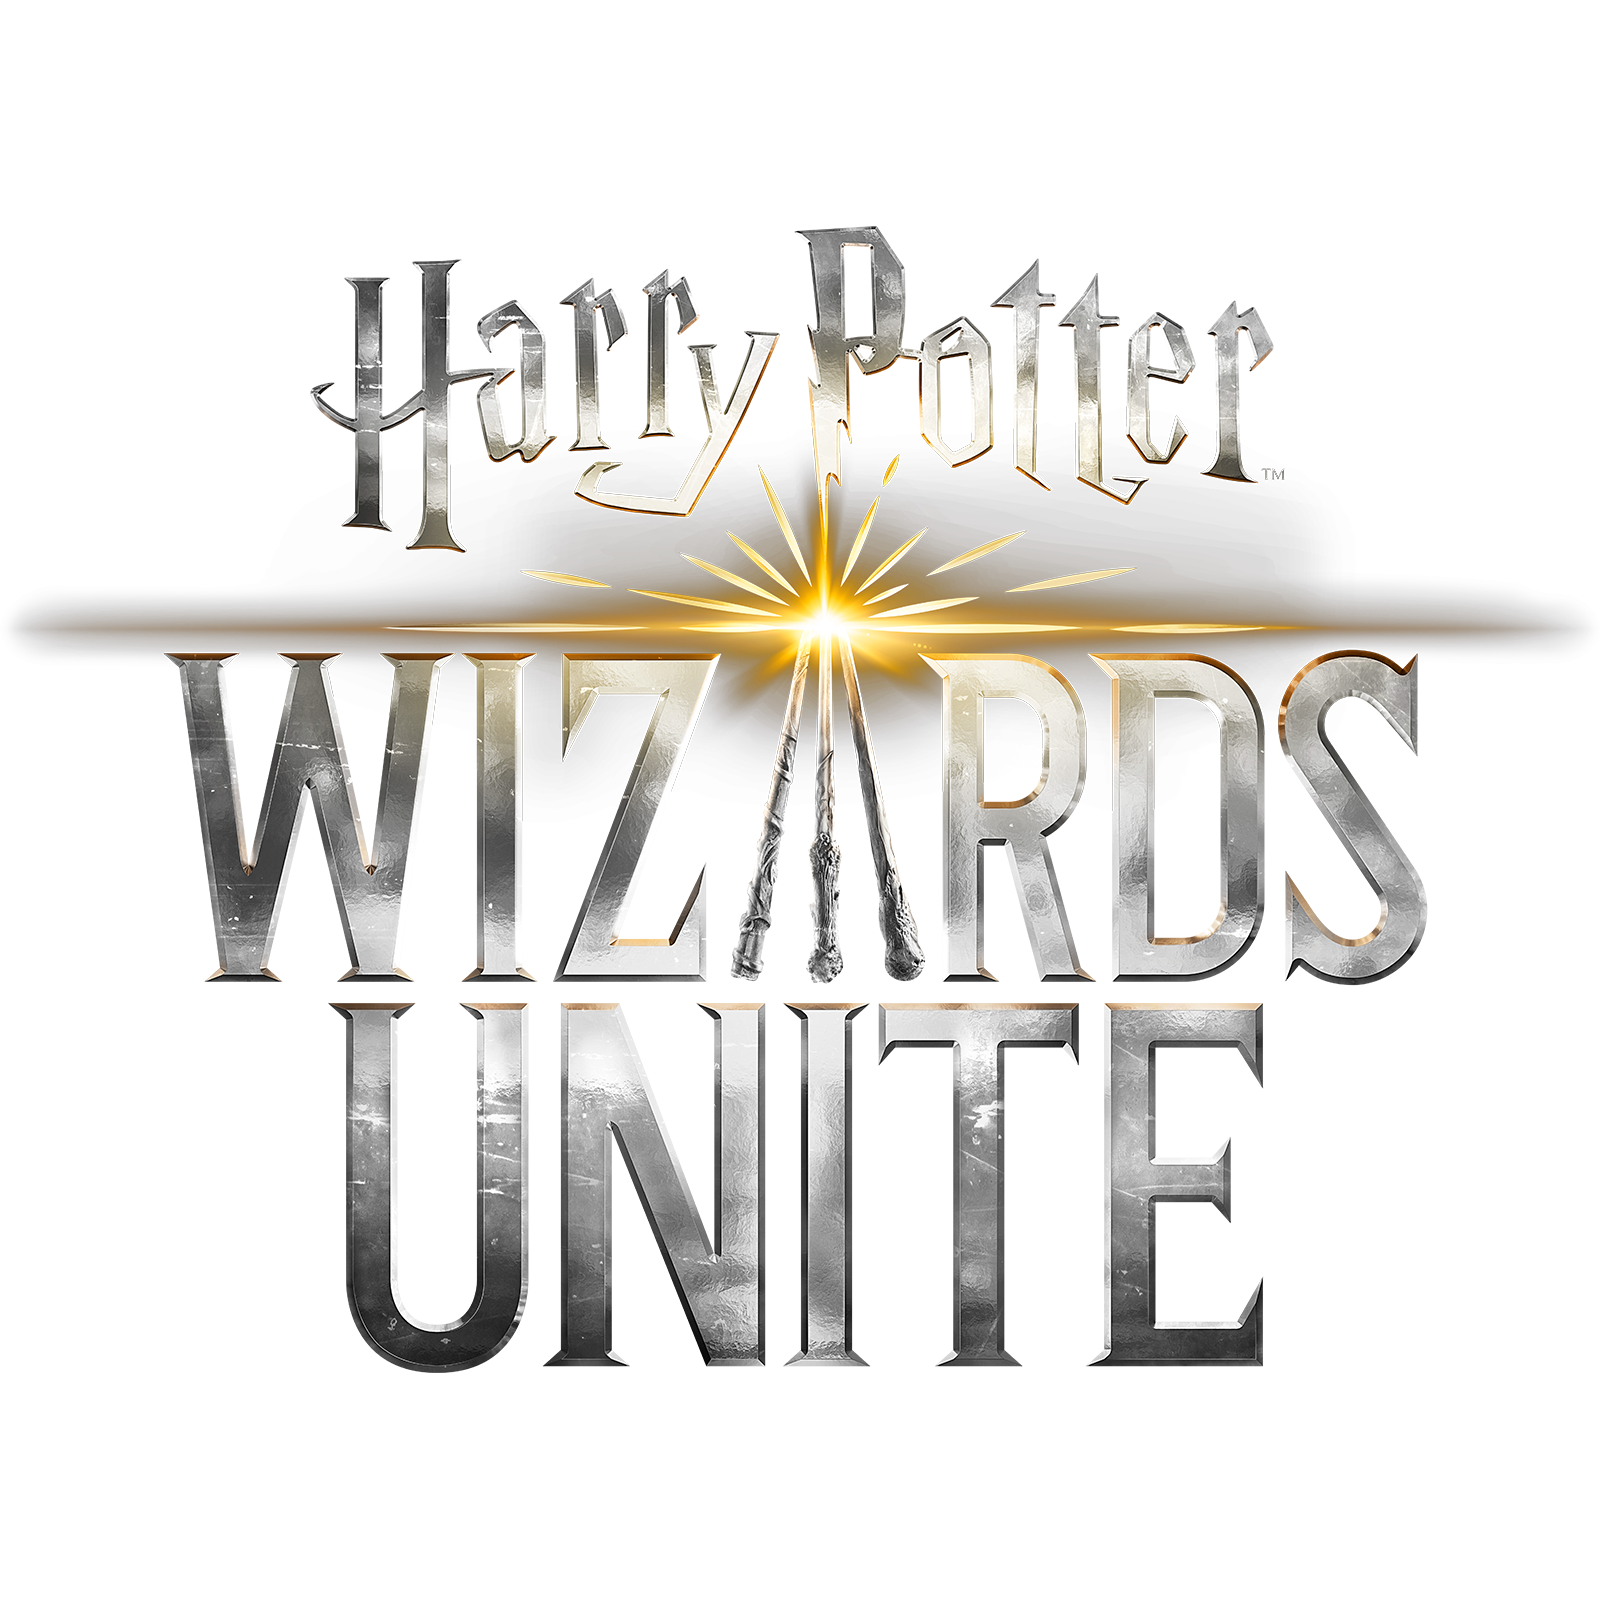 Harry Potter Wizards Unite Logo